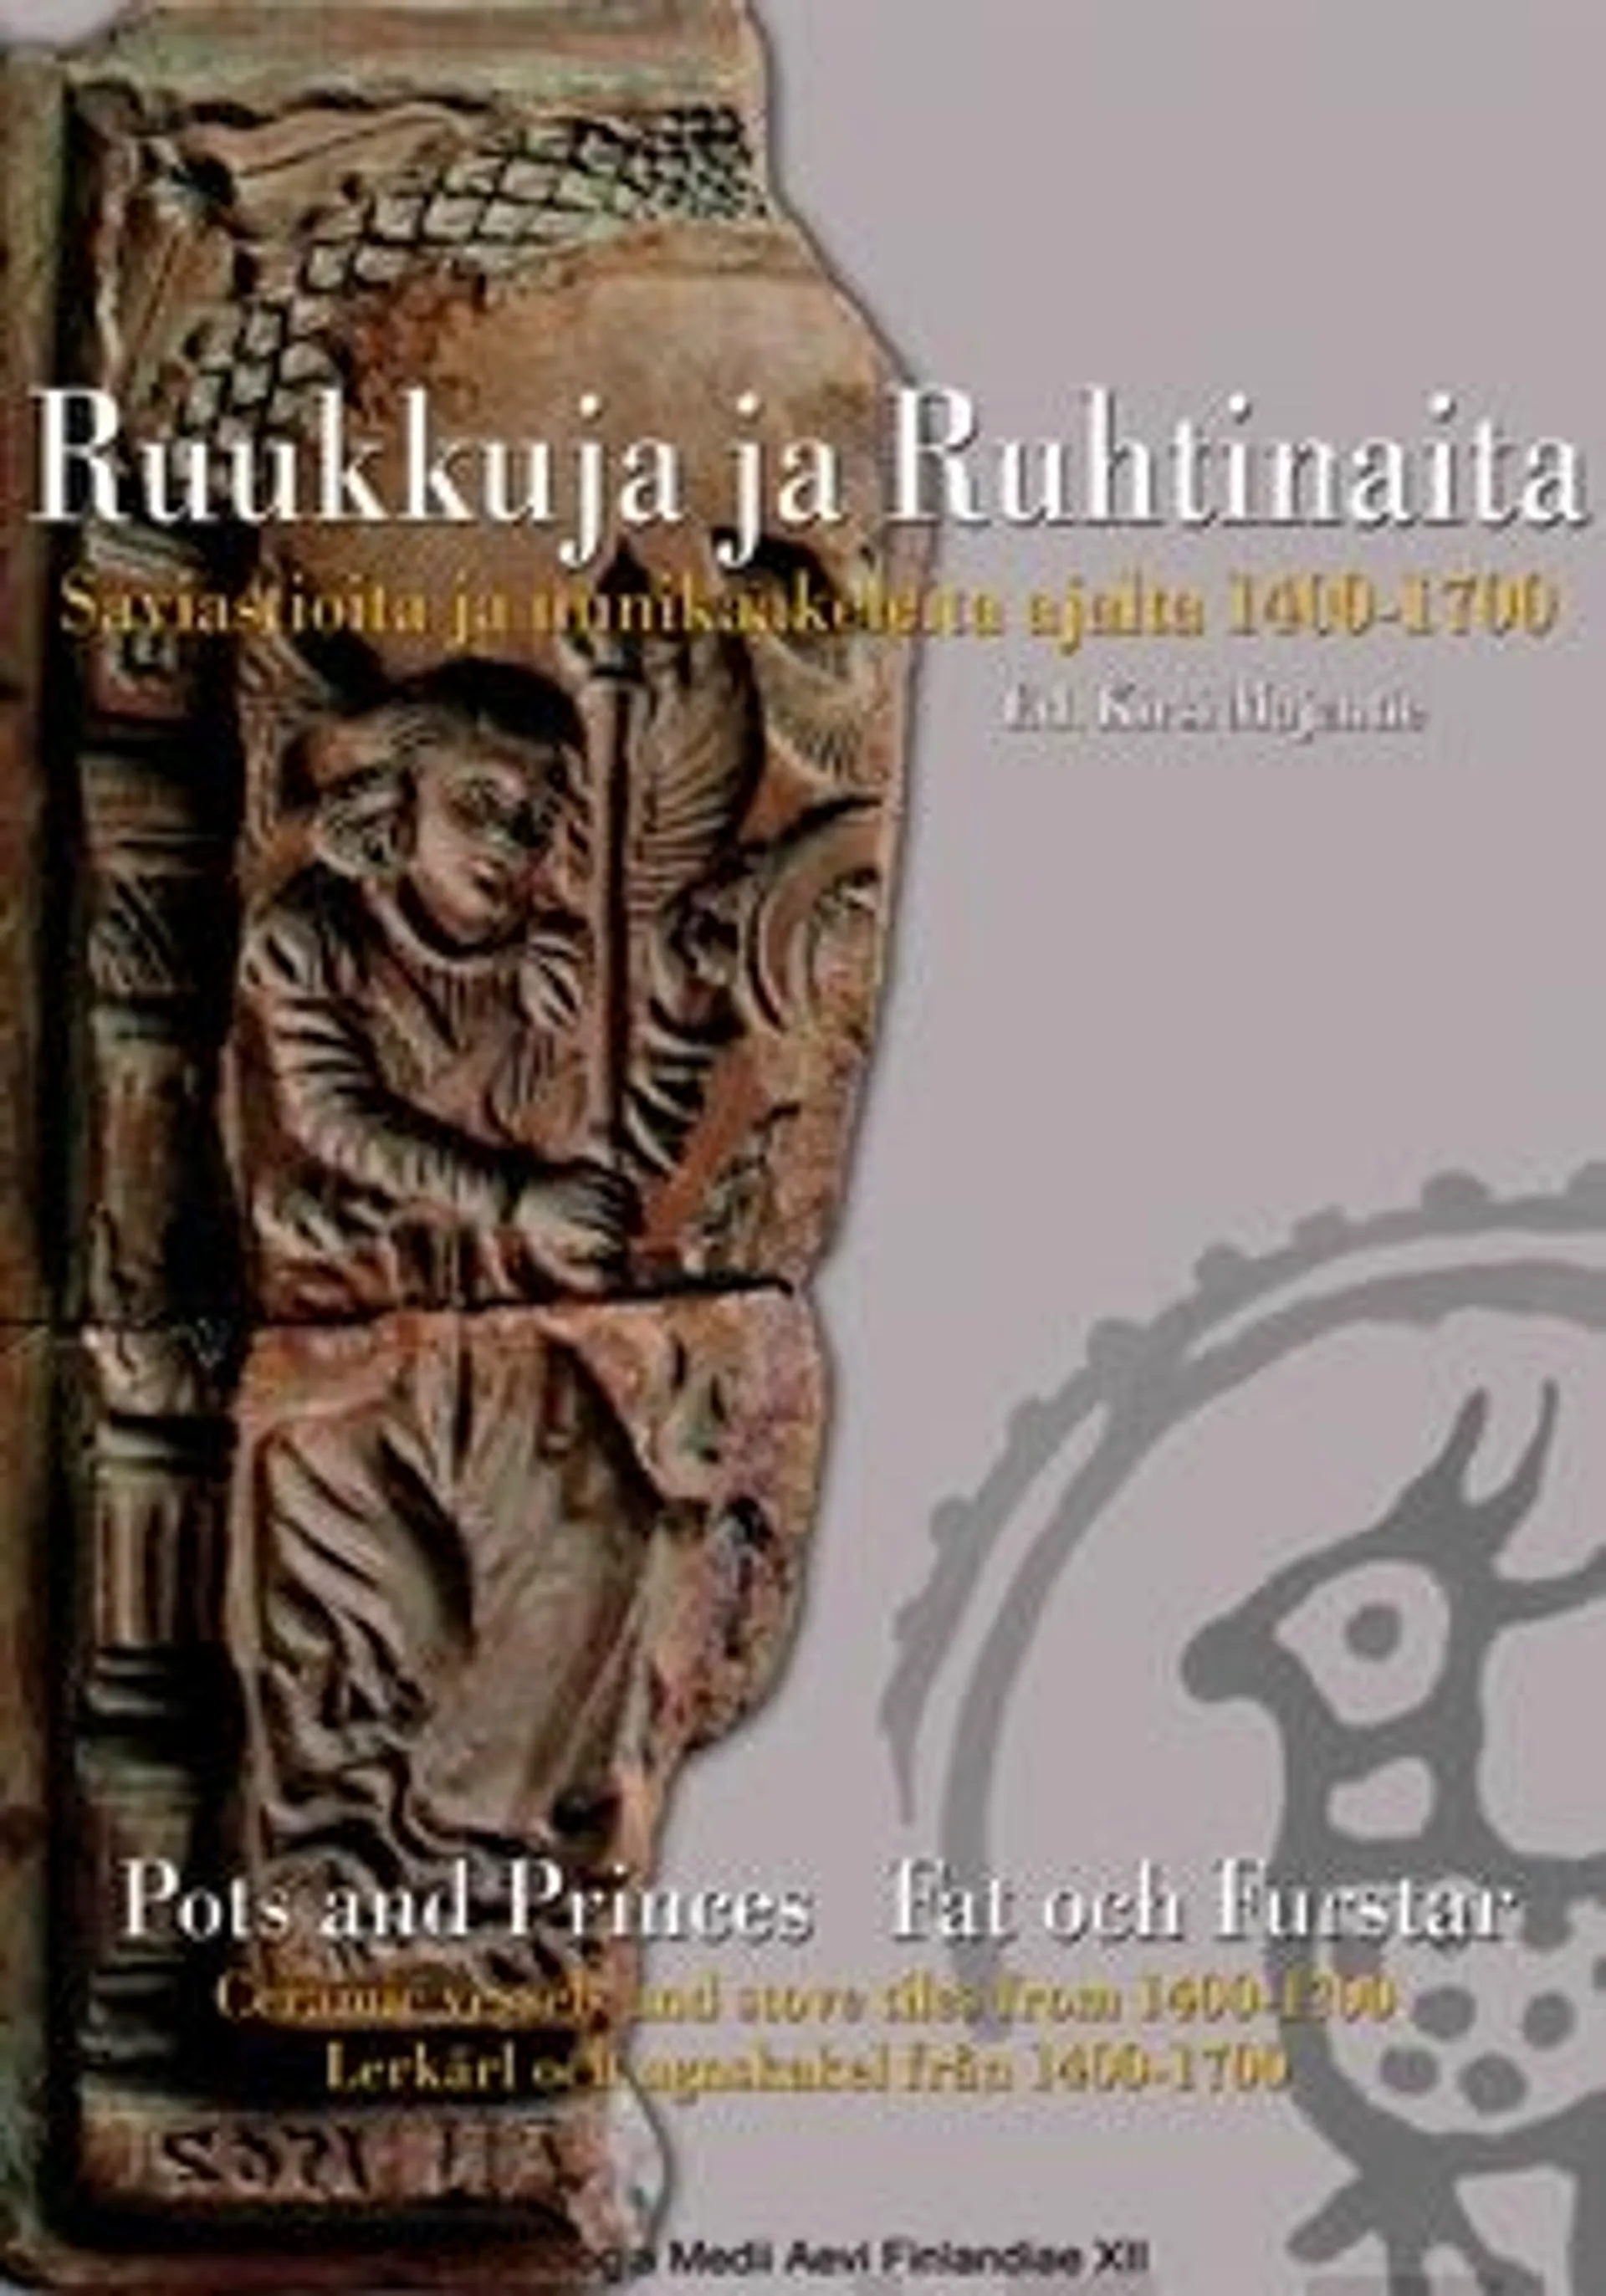 Ruukkuja ja ruhtinaita - Saviastioita ja uunikaakeleita ajalta 1400-1700 -Pots and princes - ceramic vessels andstove tiles from 1400-1700 (+DVD)